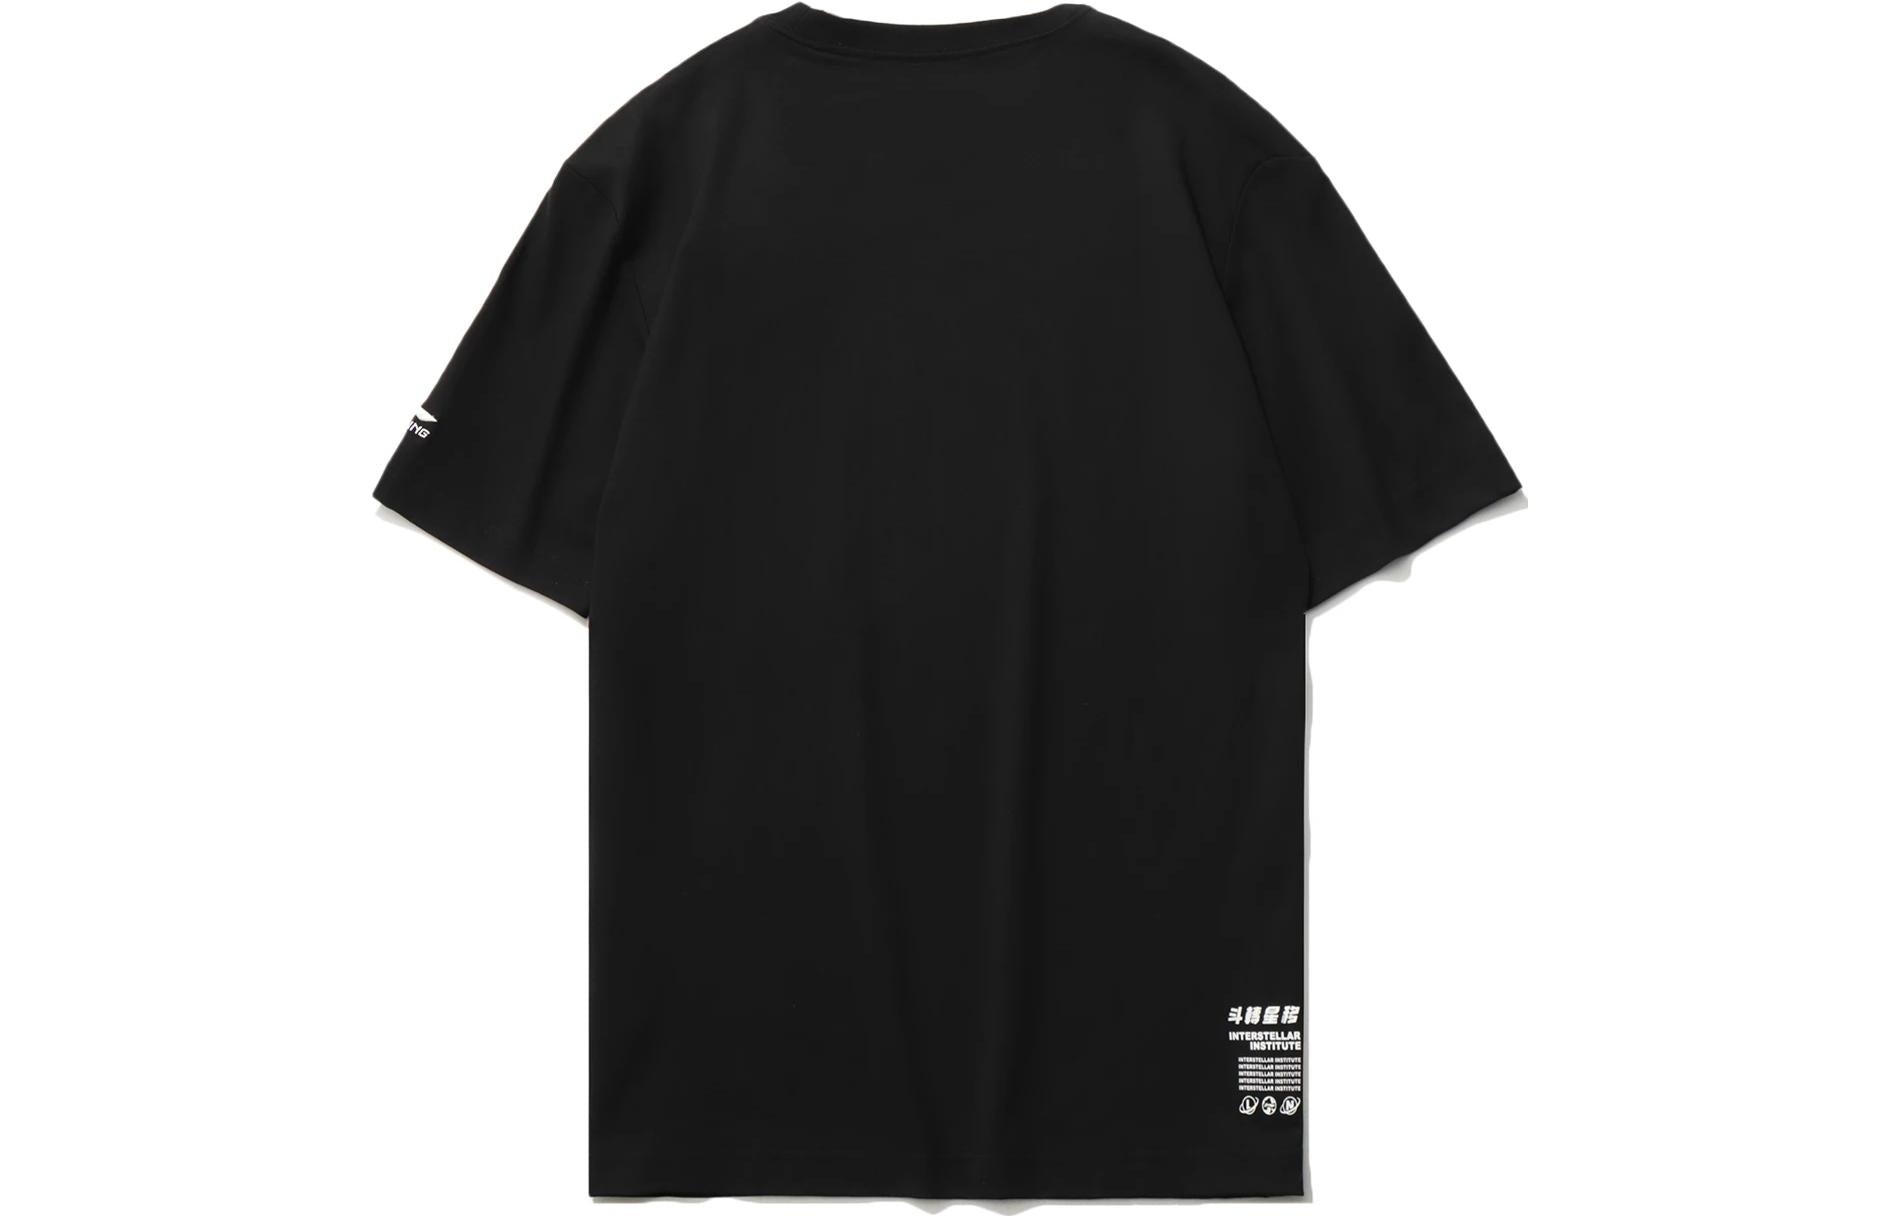 Li-Ning Atom Graphic T-shirt 'Black' AHST735-1 - 2